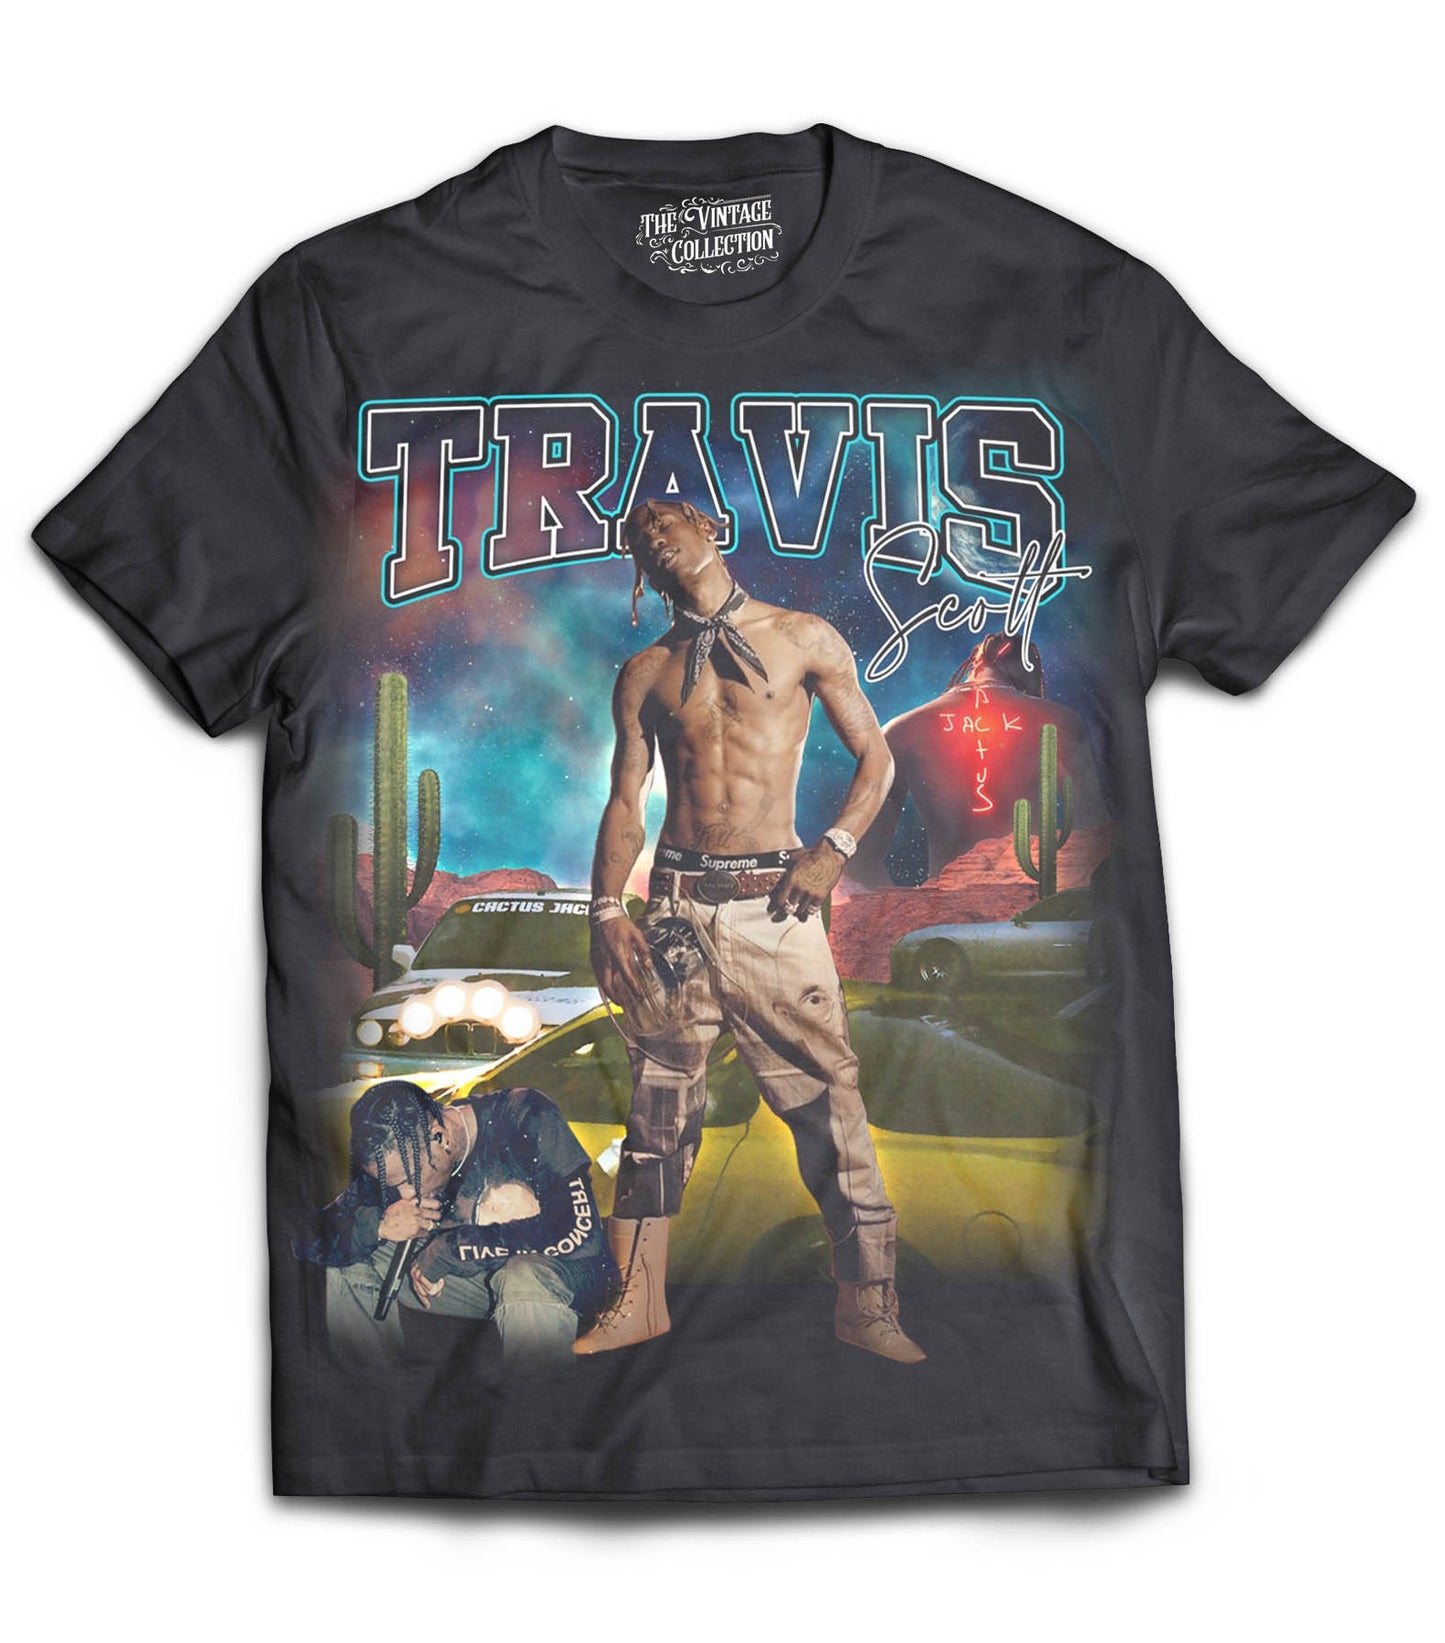 Travis Scott Tribute Shirt #2 (Black)